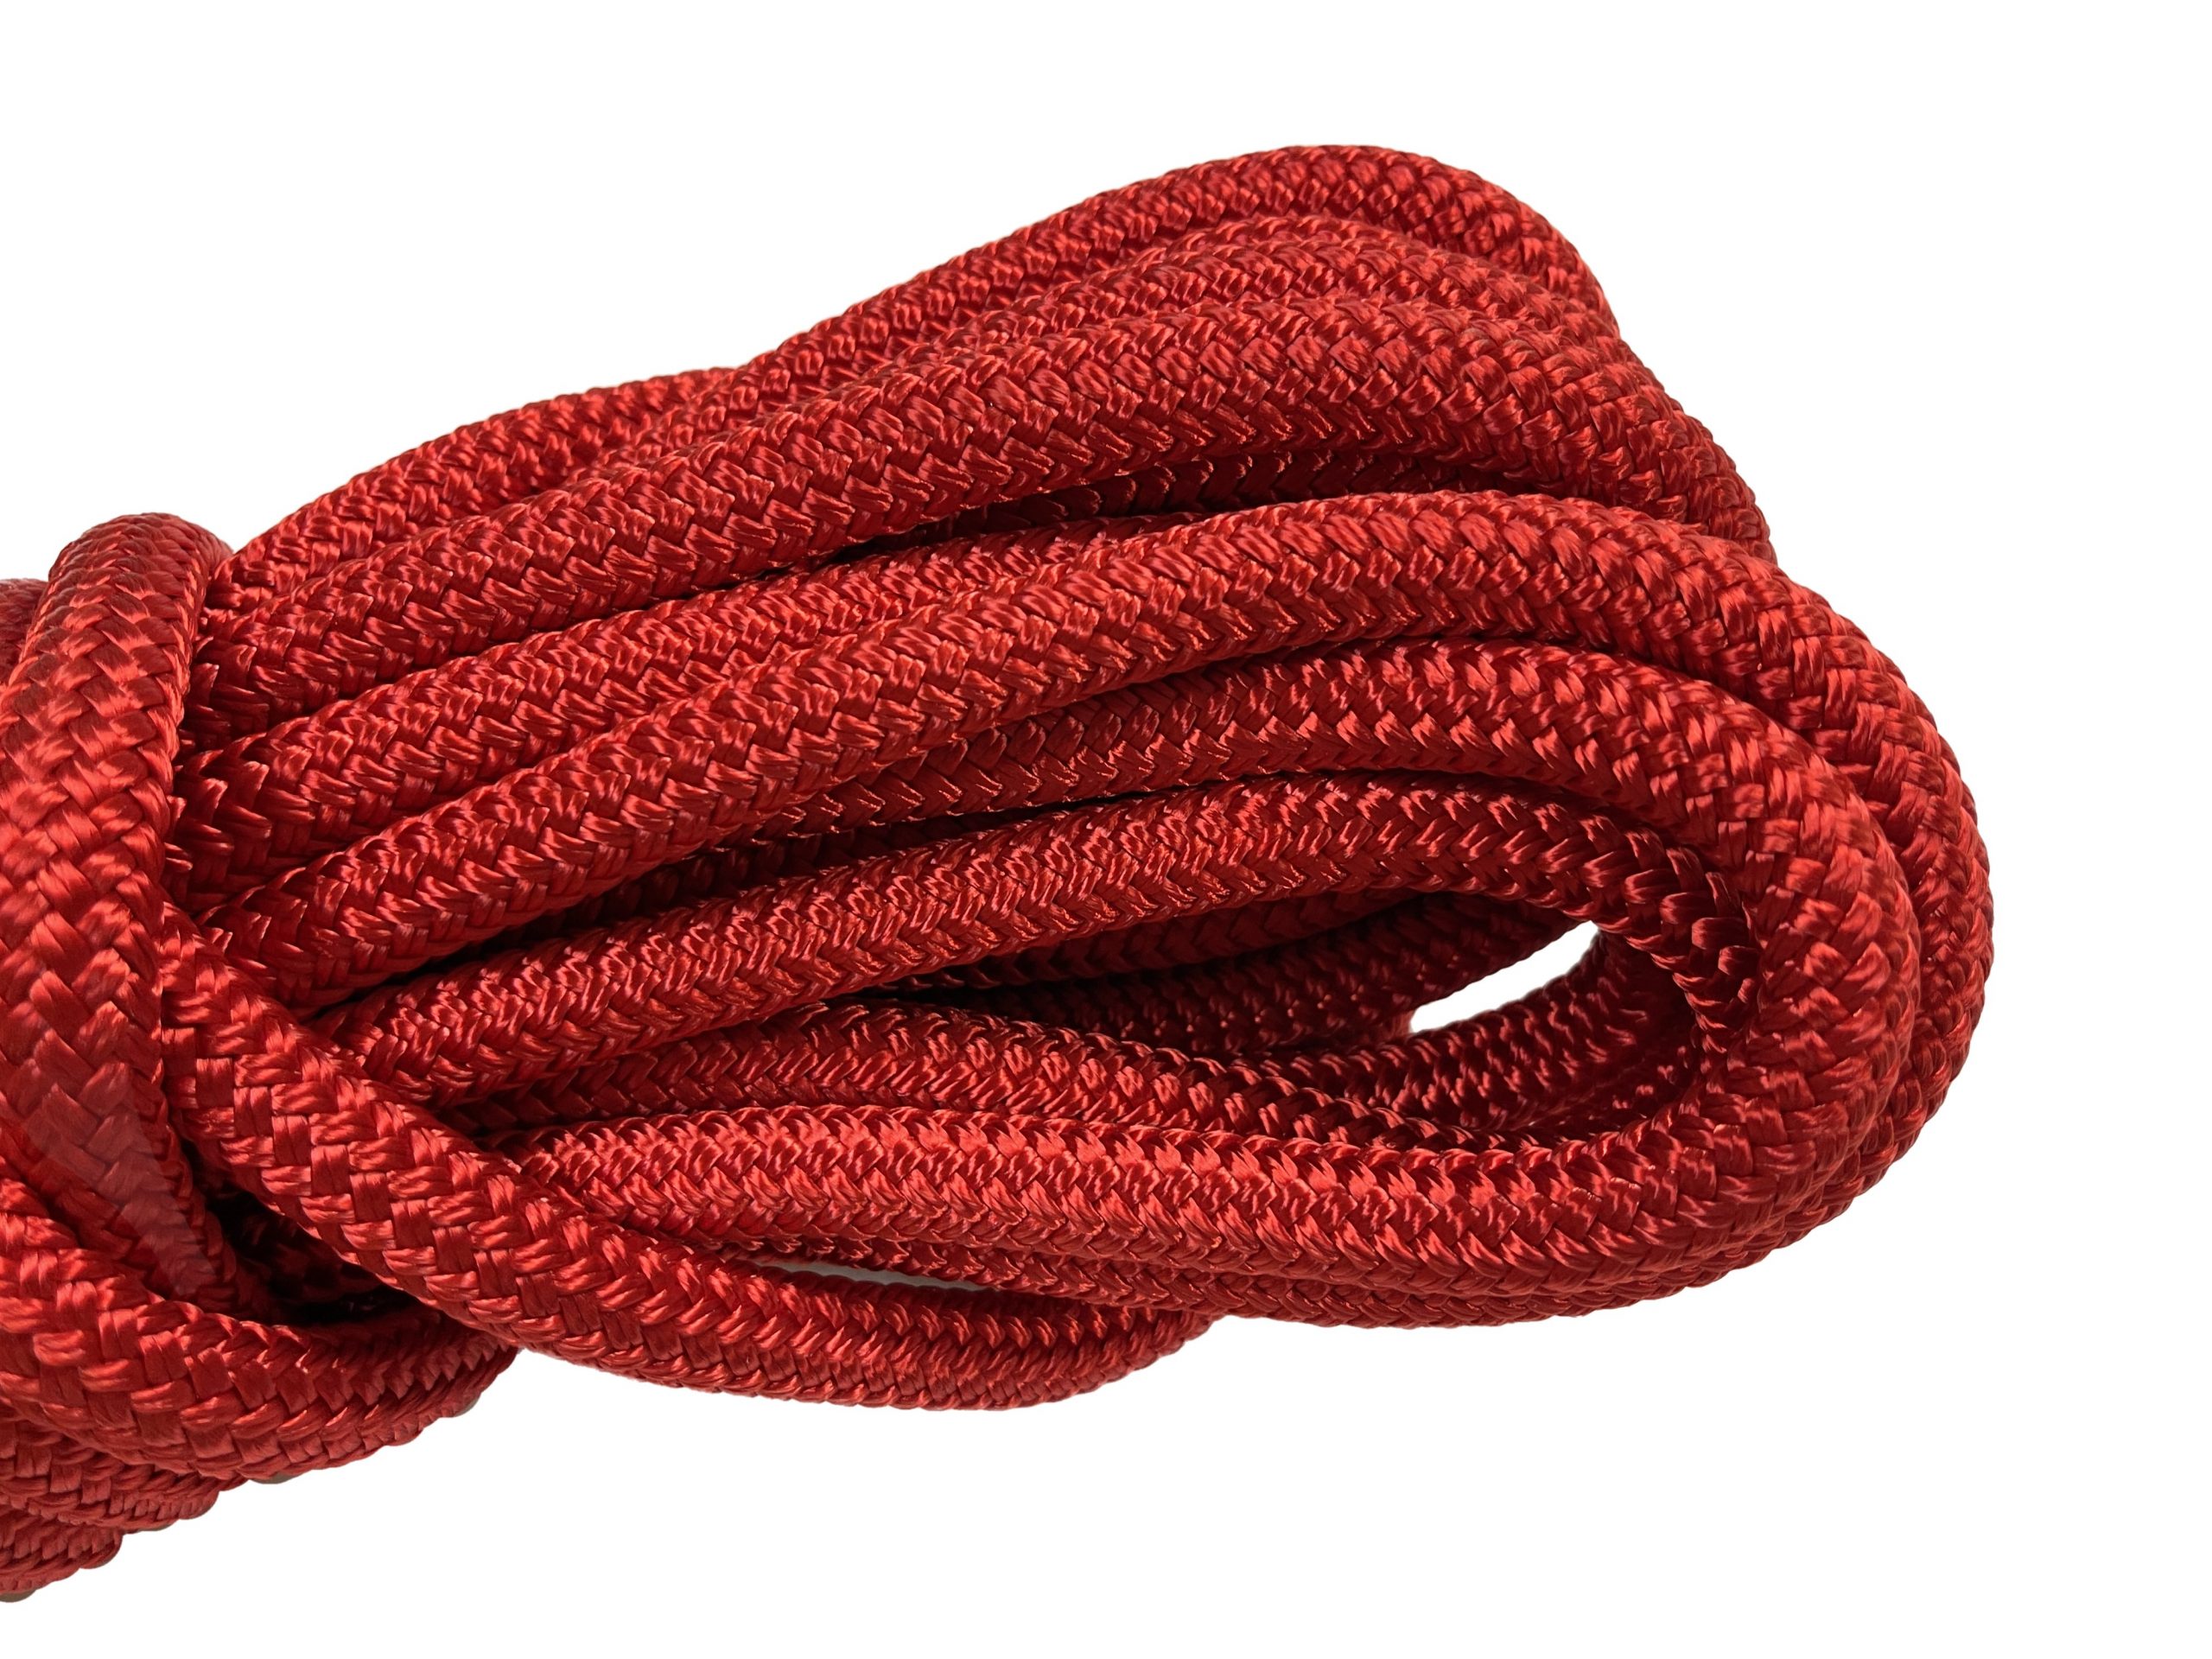 135 ft of marine rope 5/8